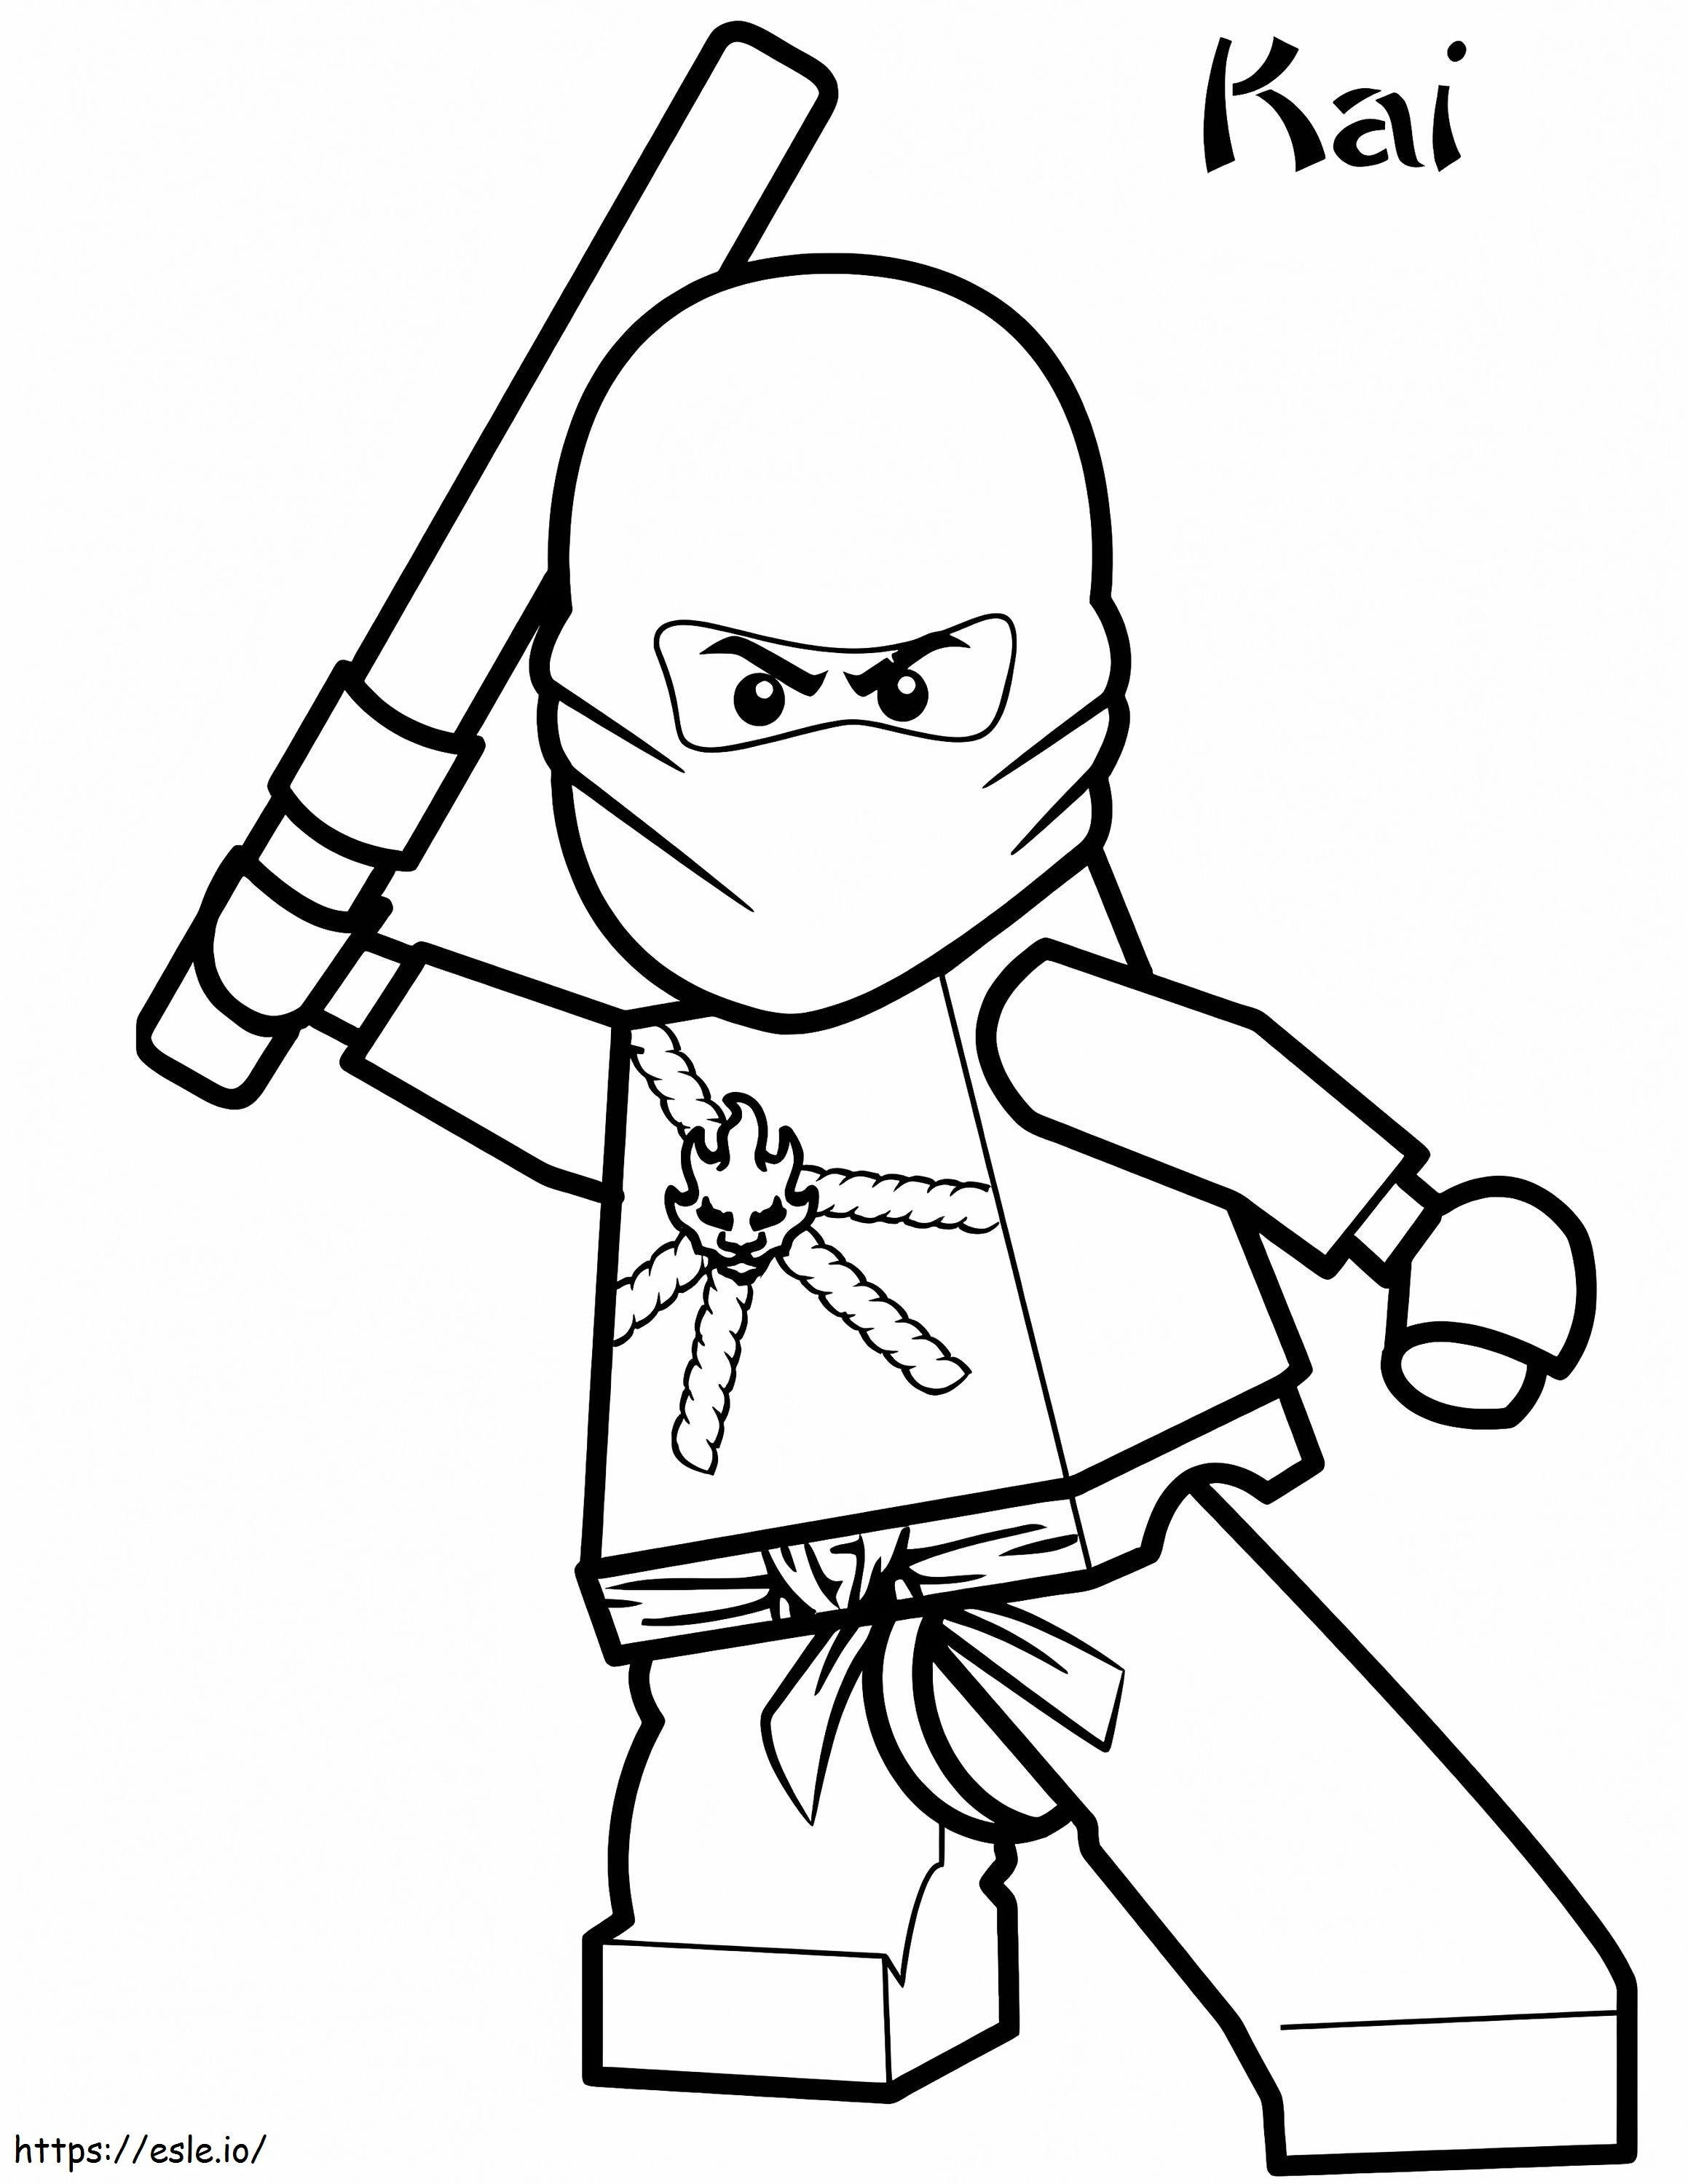 Kai z Ninjago kolorowanka